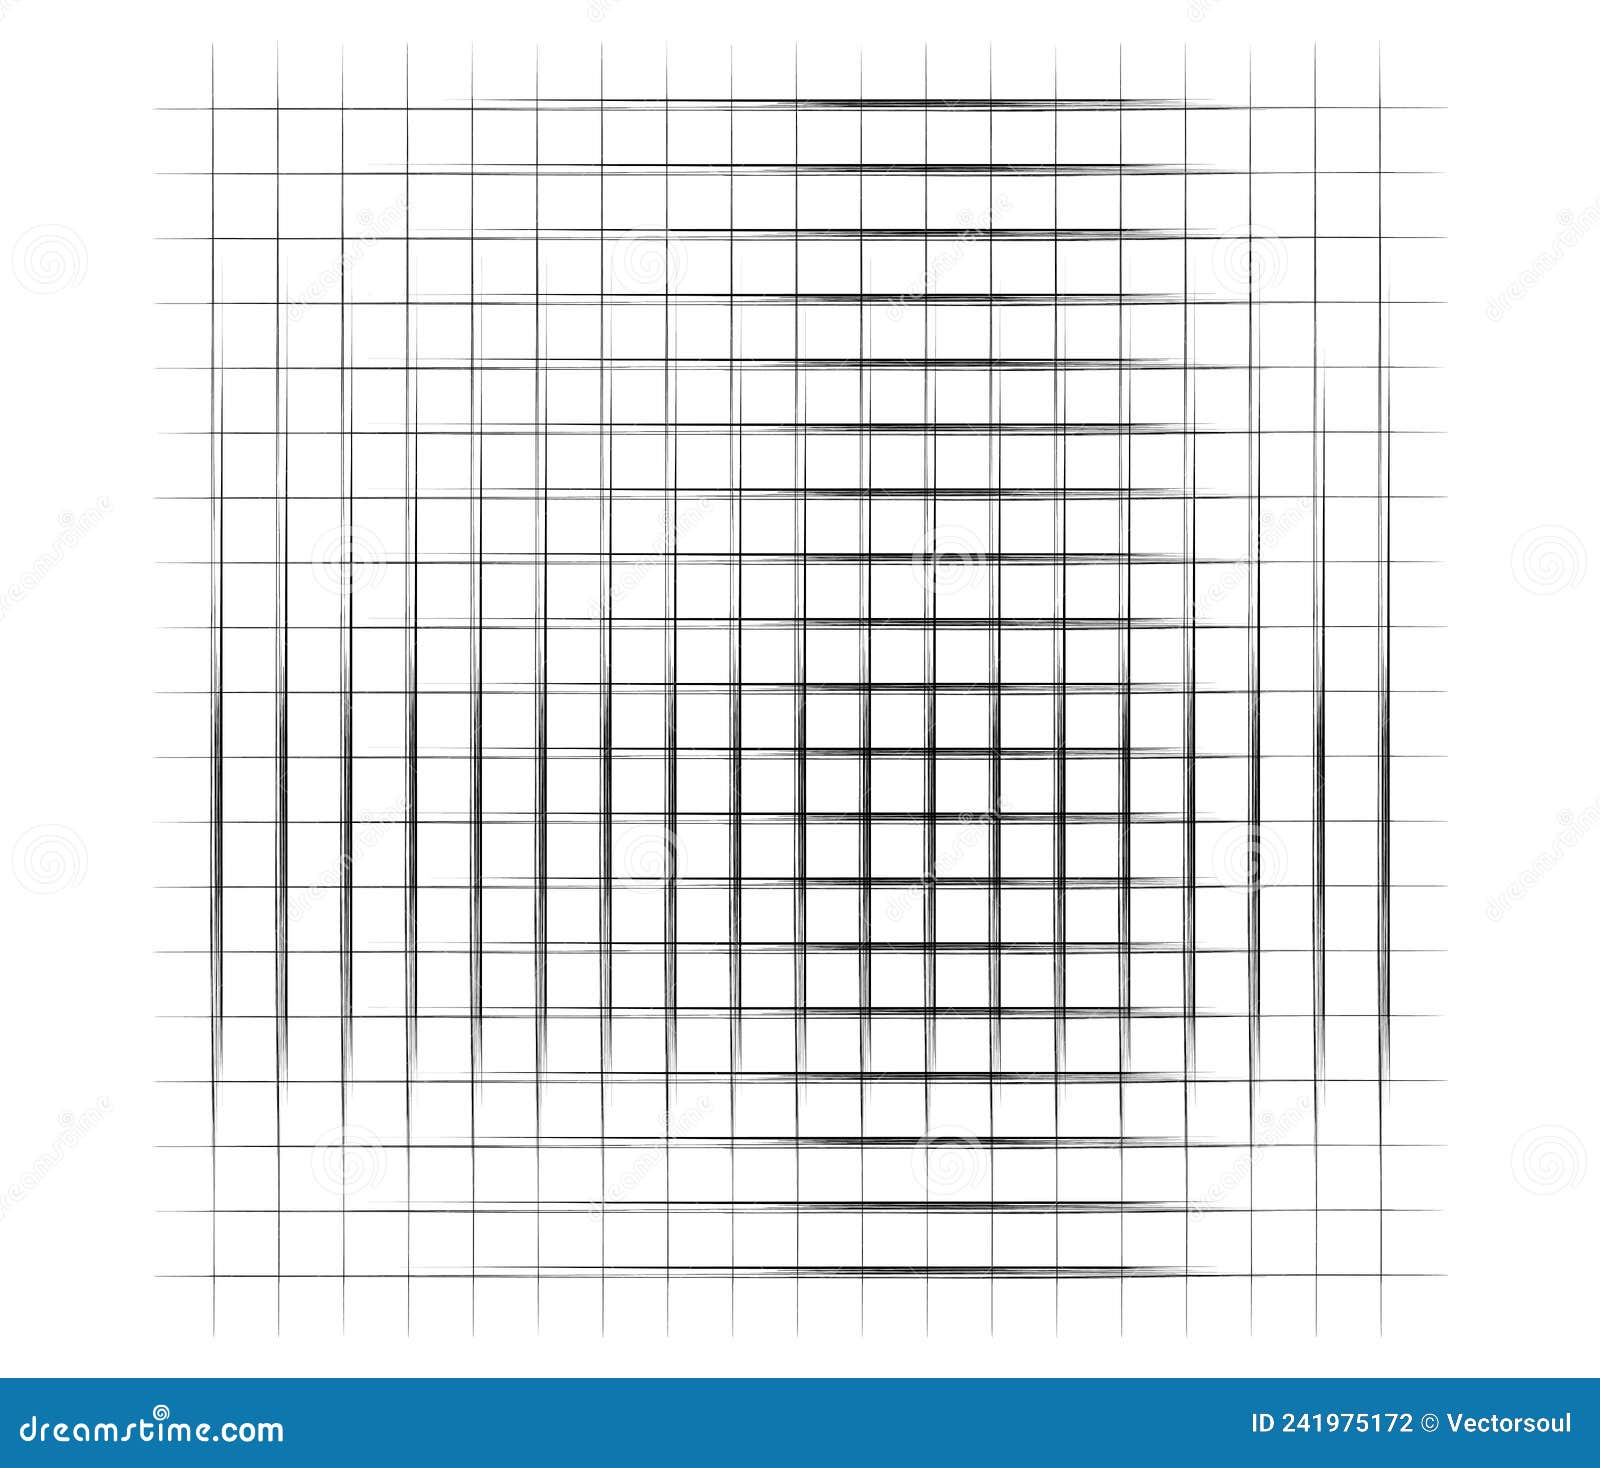 grid, mesh, graticule with grungy, irregular lines. grunge checkered grating, trellis, lattern pattern